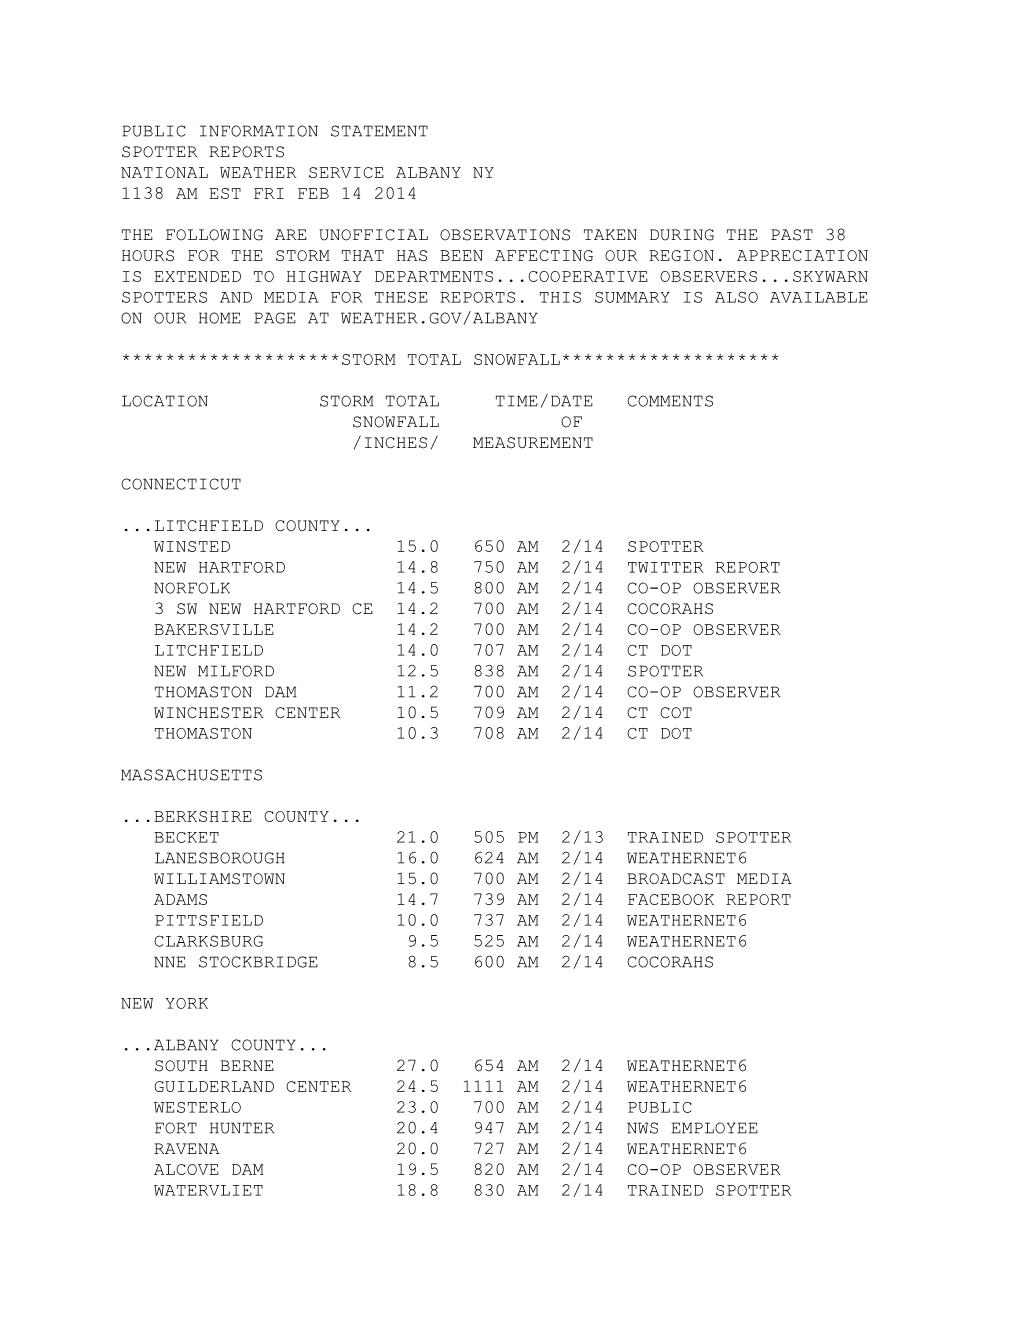 Public Information Statement Spotter Reports National Weather Service Albany Ny 1138 Am Est Fri Feb 14 2014